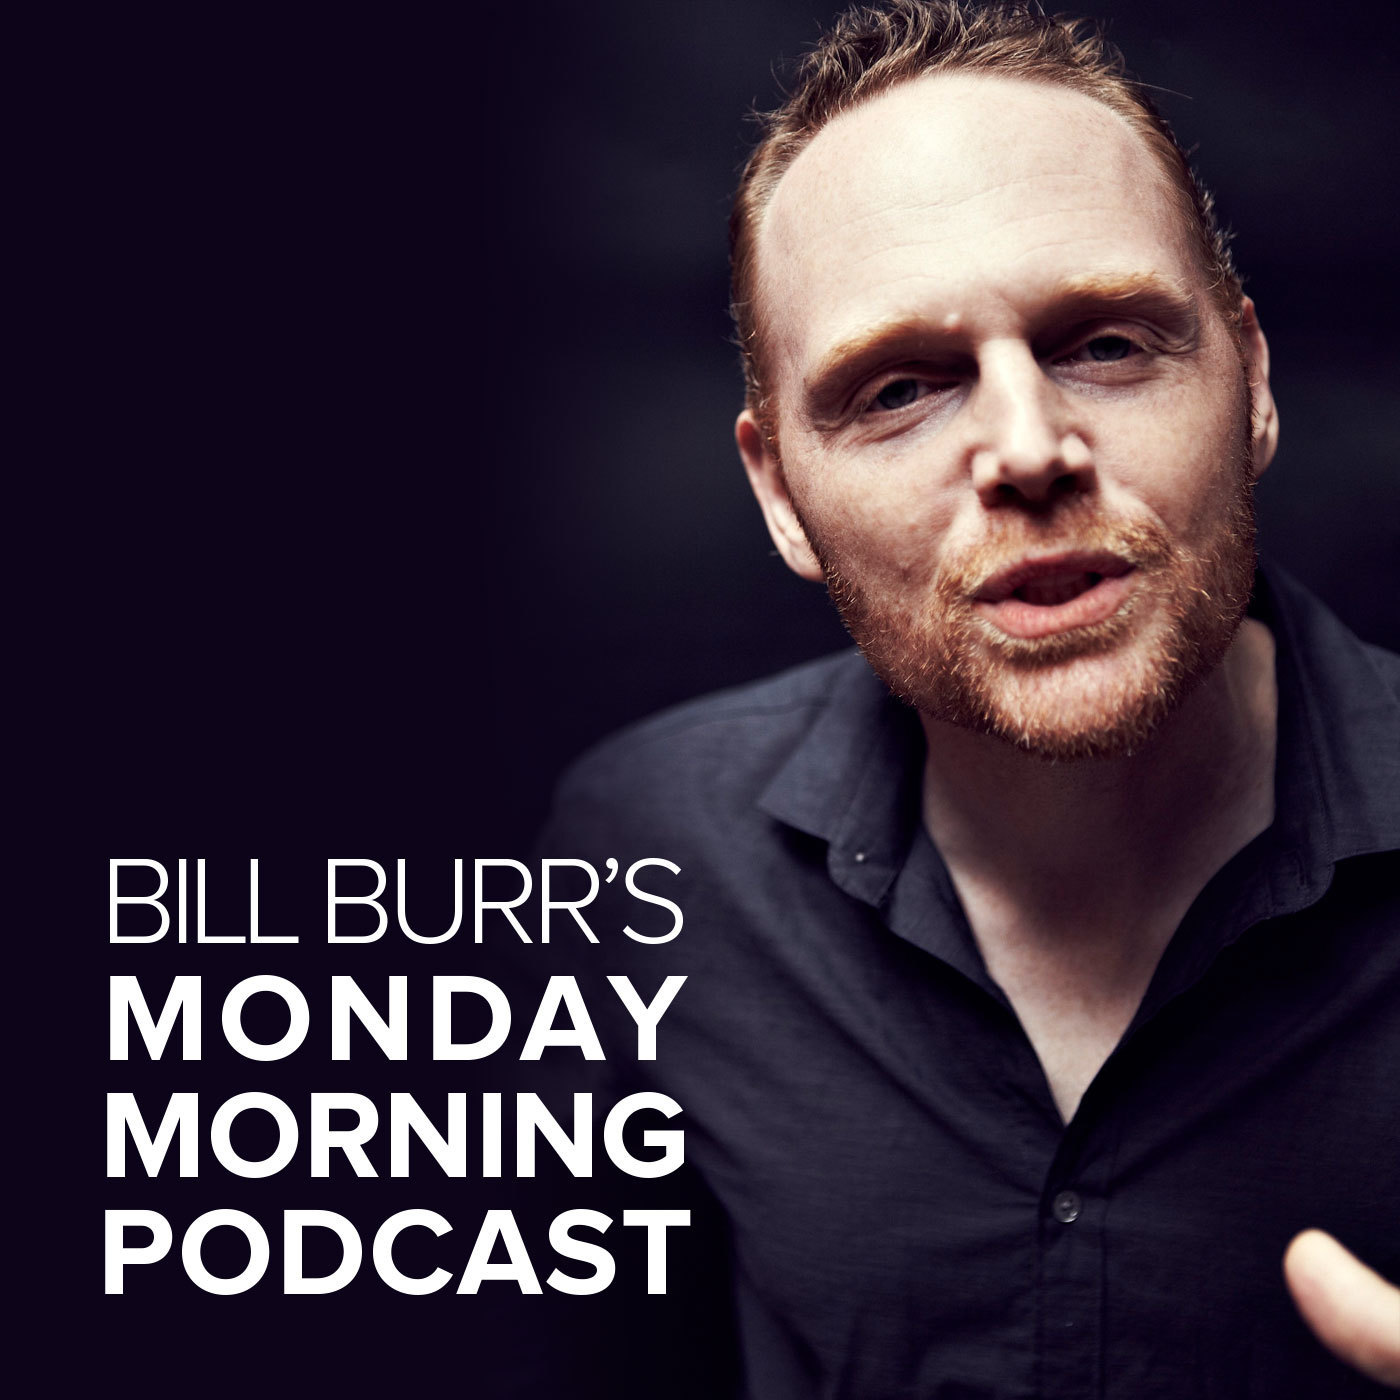 Monday Morning Podcast 12-26-16